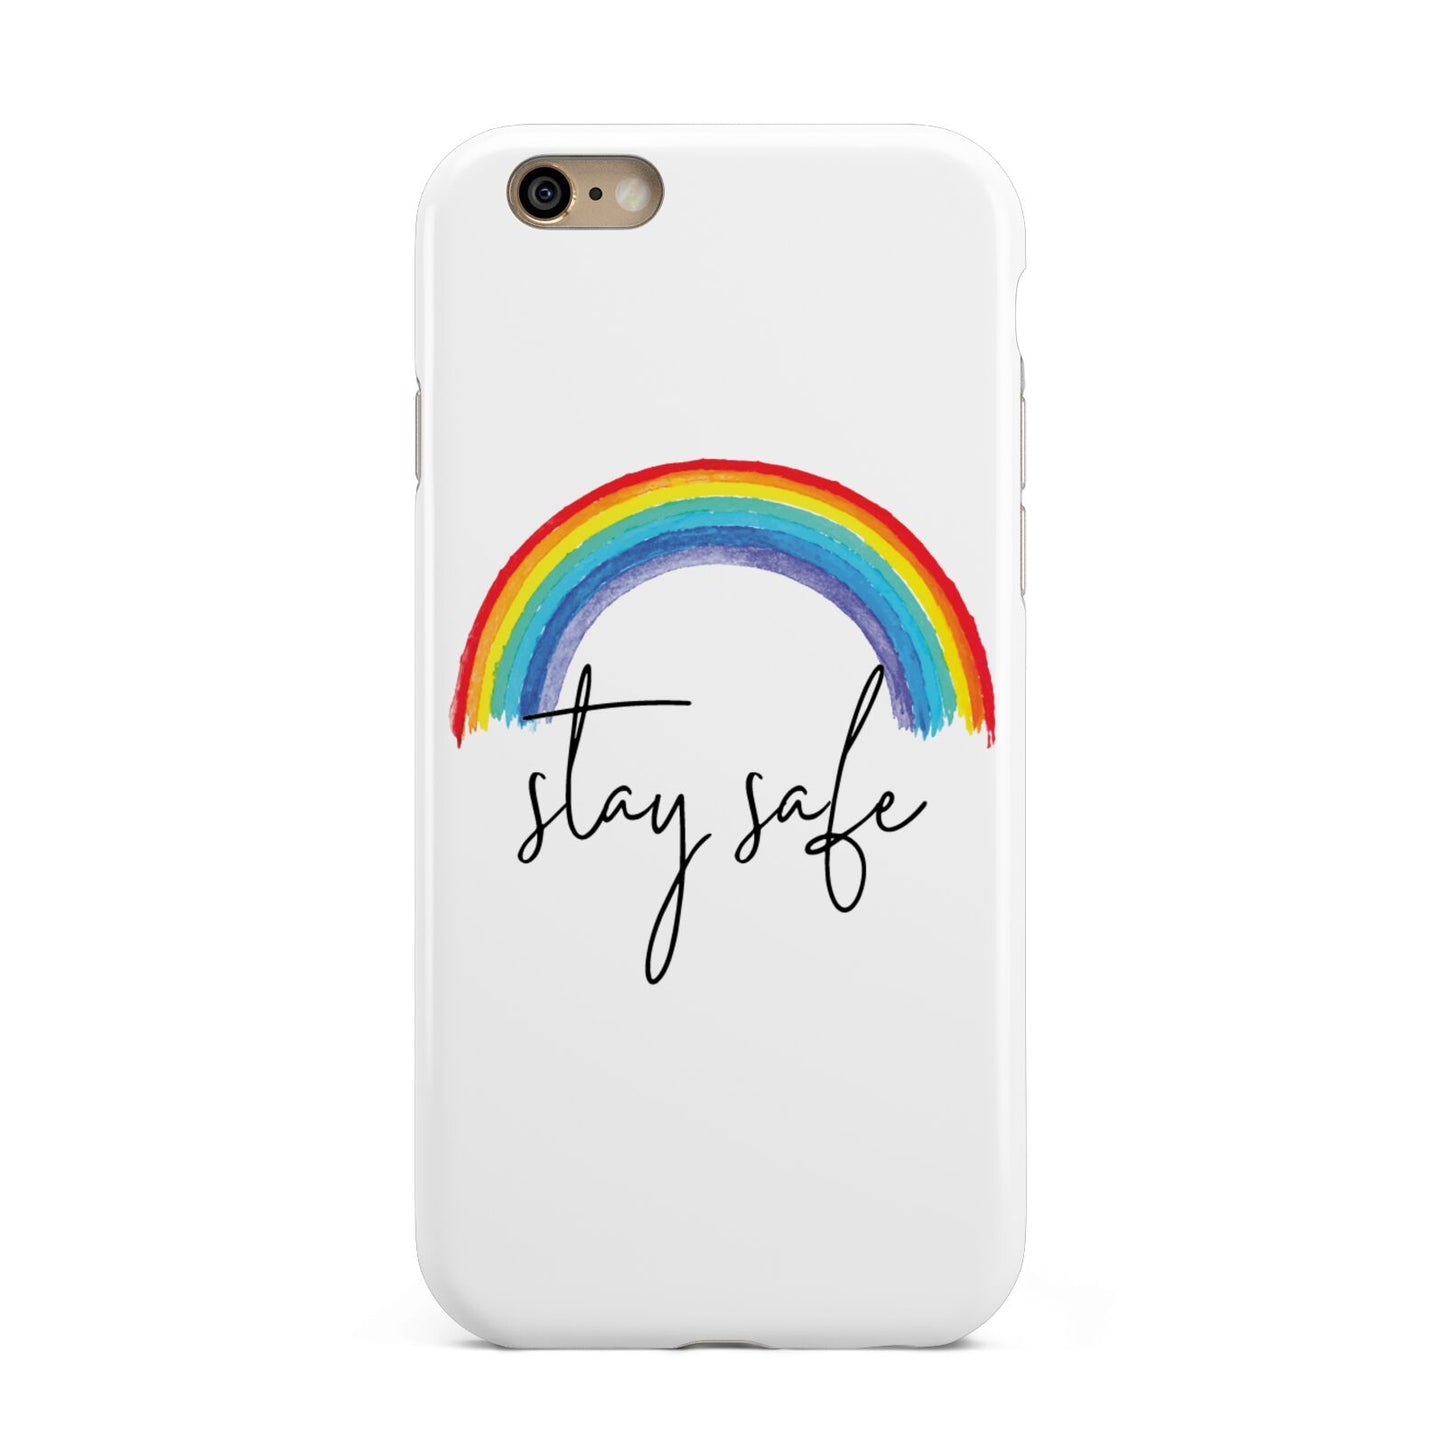 Stay Safe Rainbow Apple iPhone 6 3D Tough Case